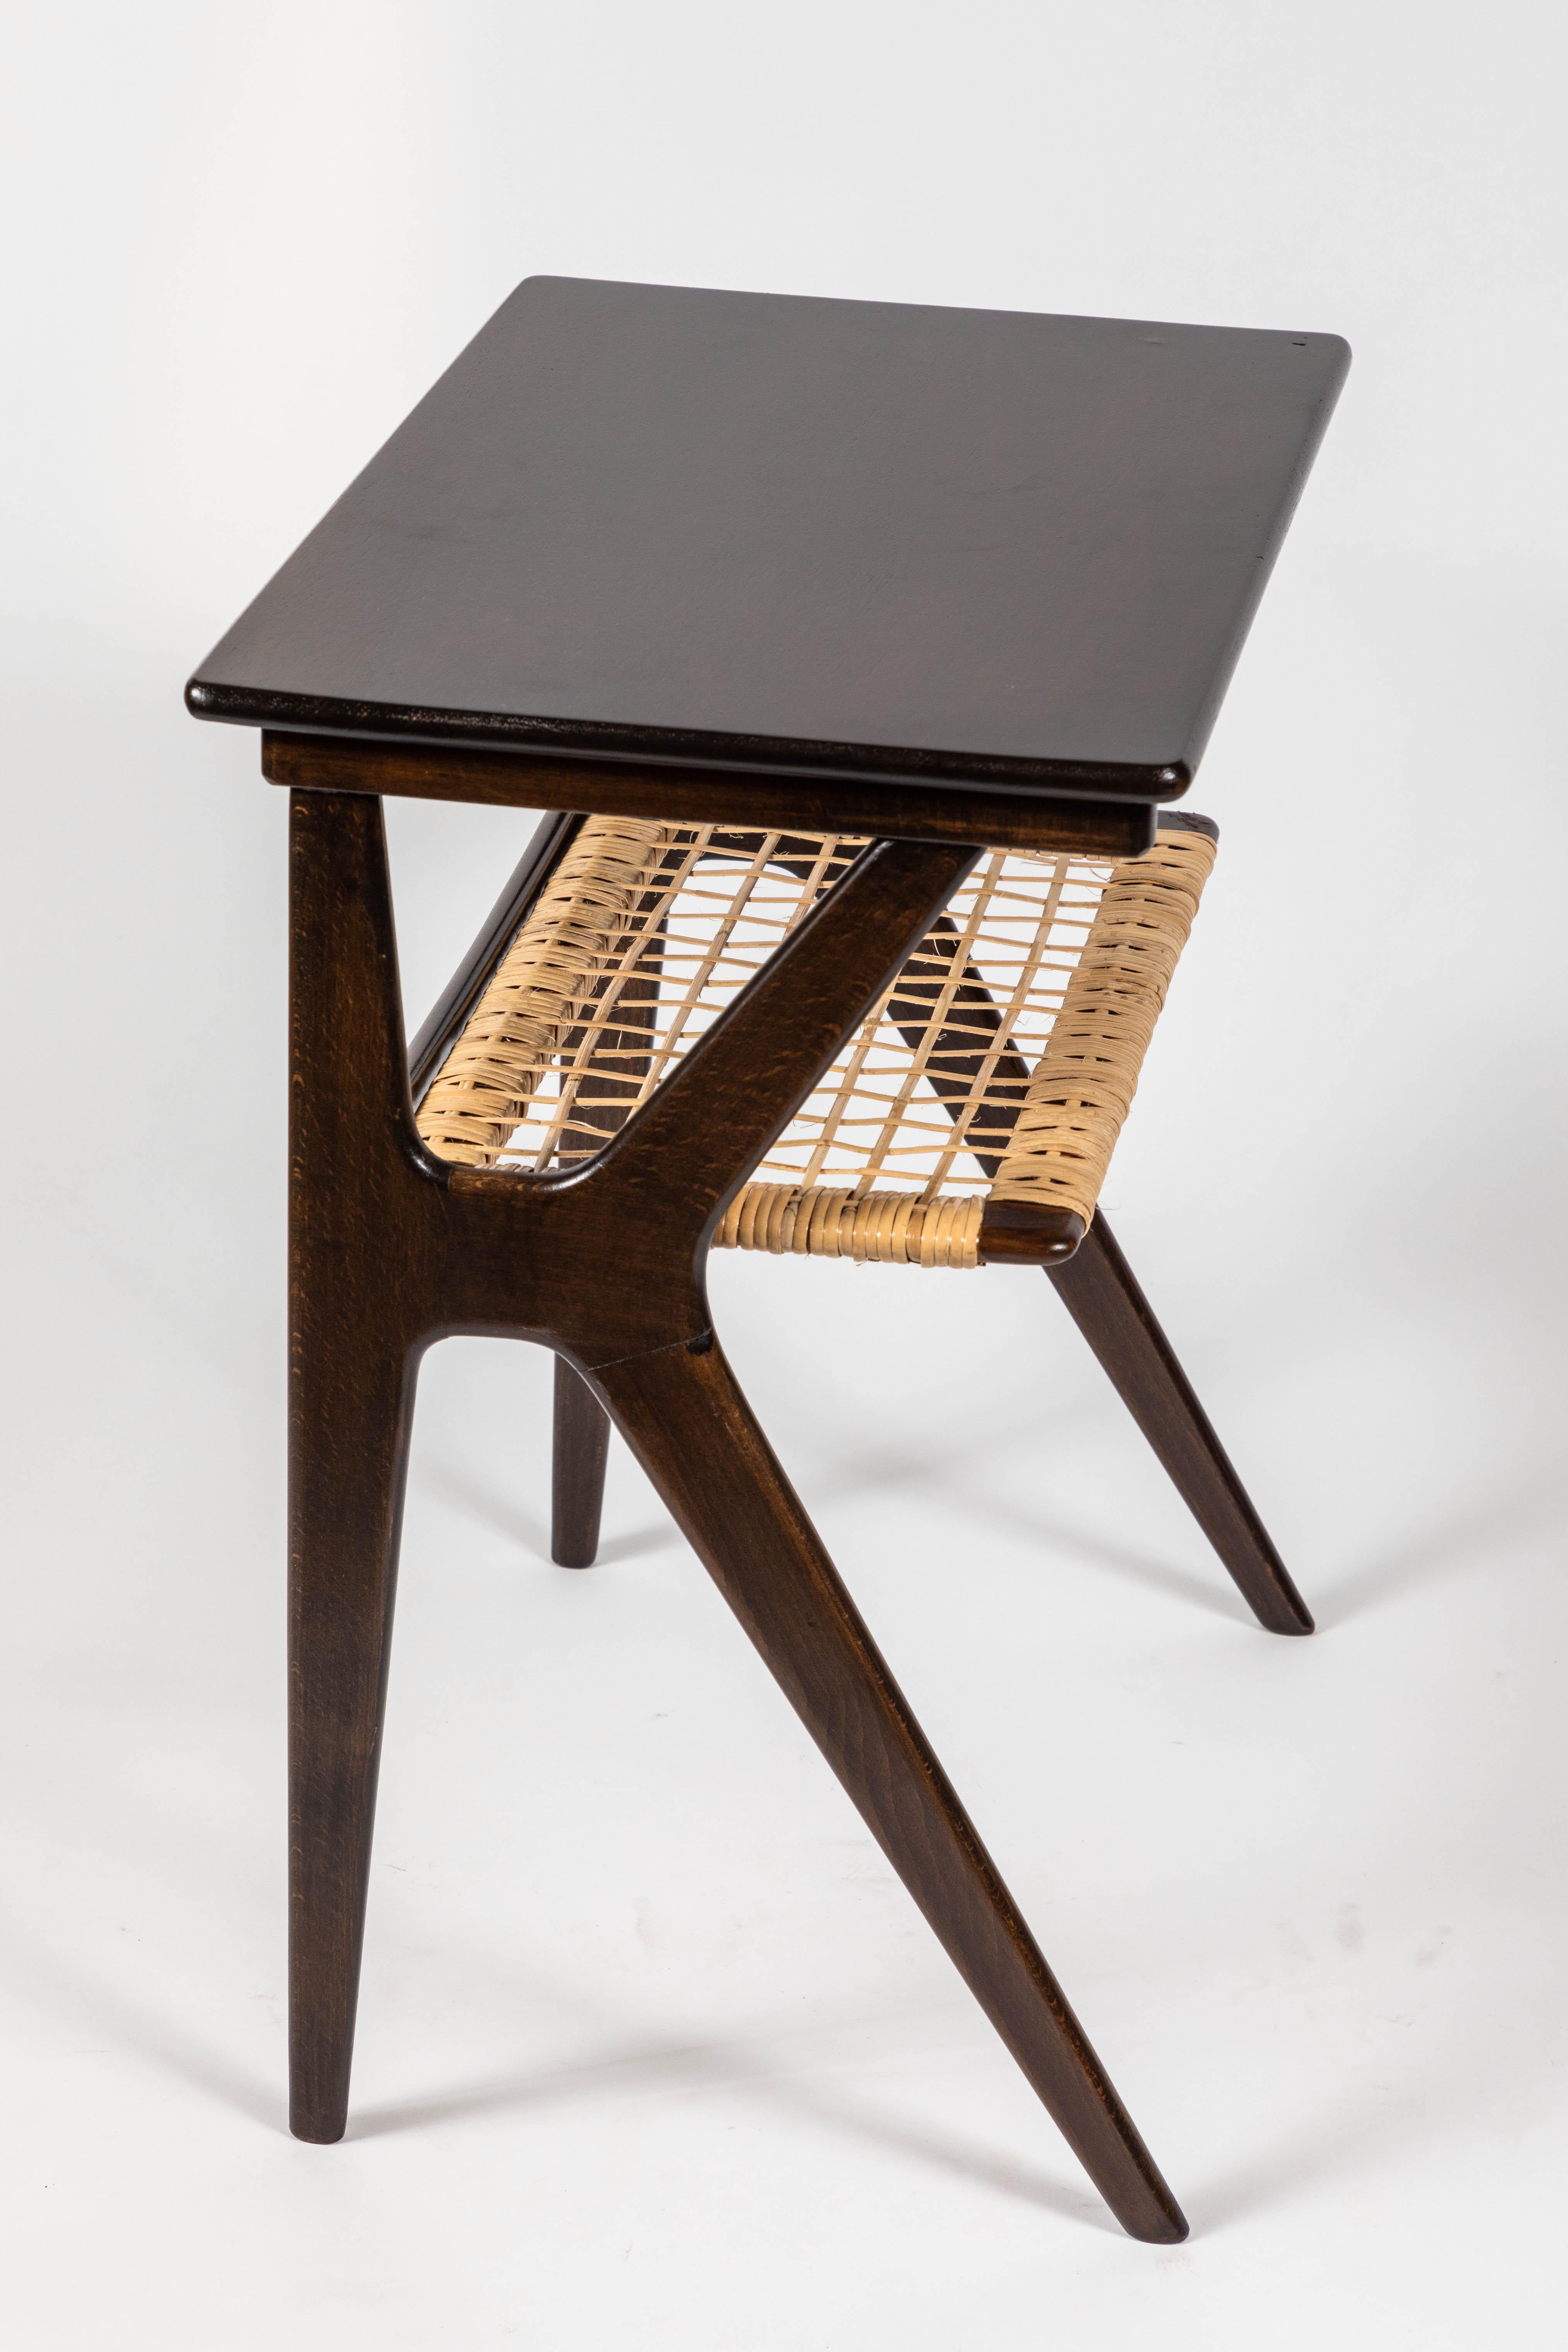 Midcentury Walnut Side Table with Woven Cane Bottom Shelf (20. Jahrhundert)